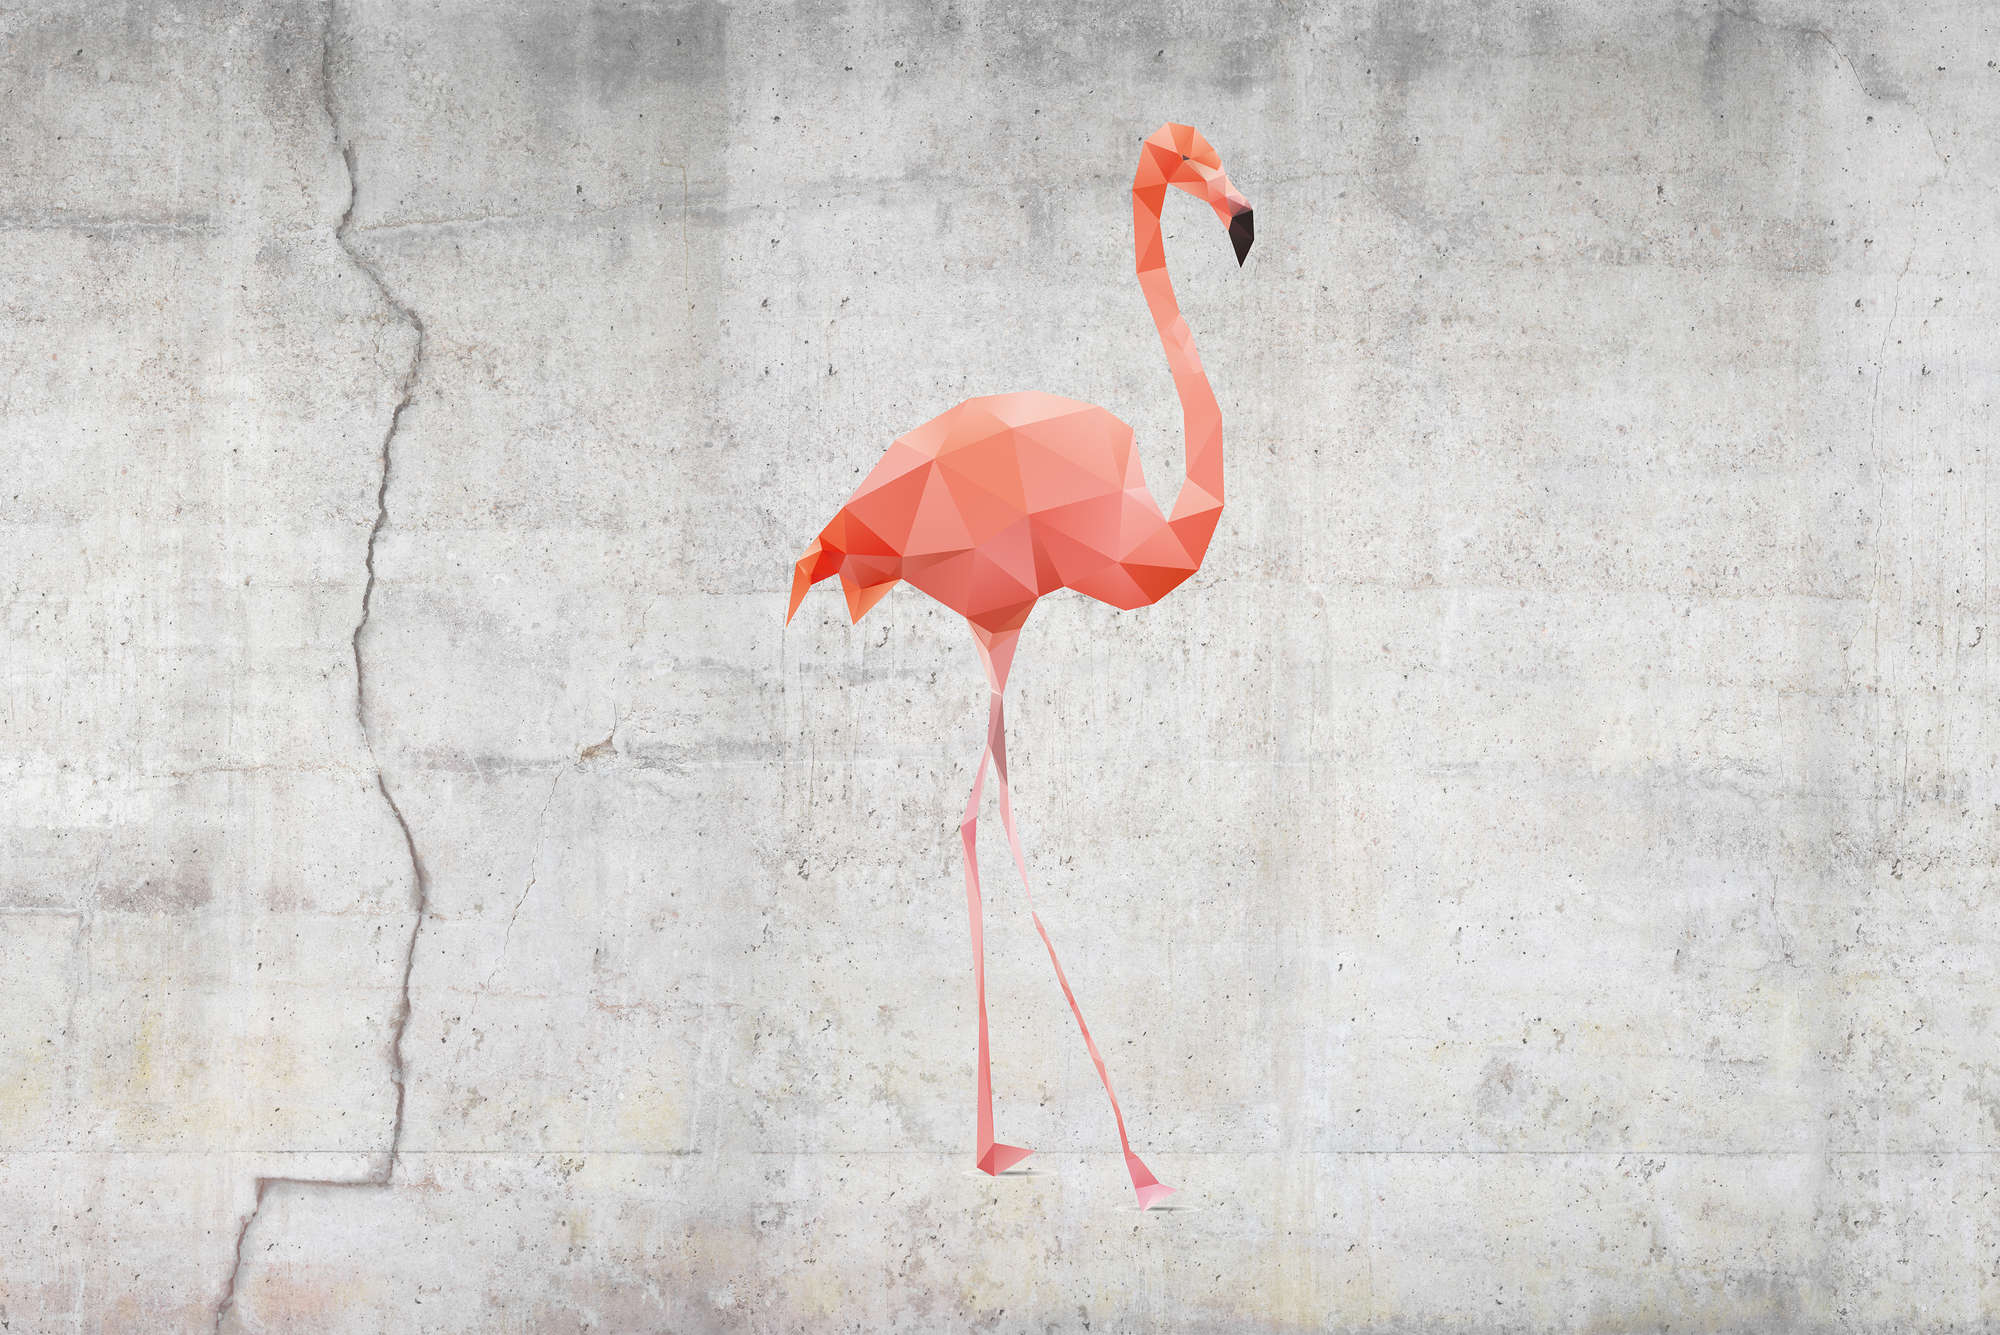             Graphic mural flamingo motif on textured nonwoven
        